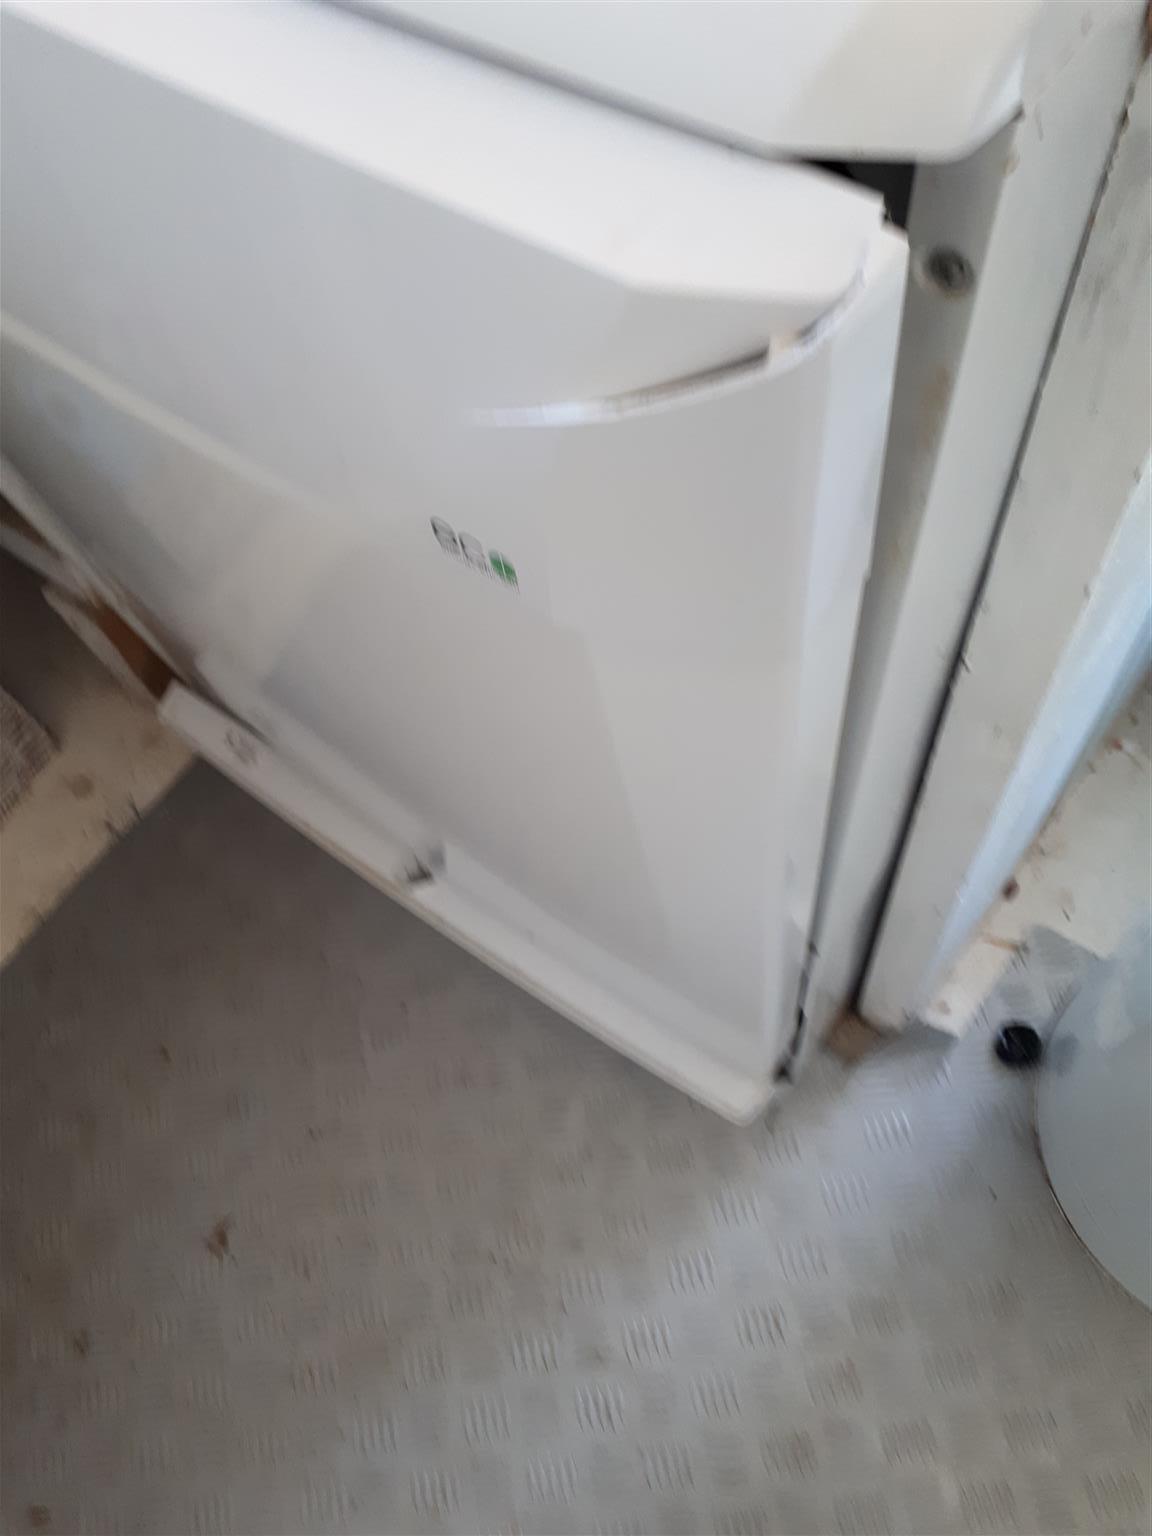 DEFY eco Dishwasher